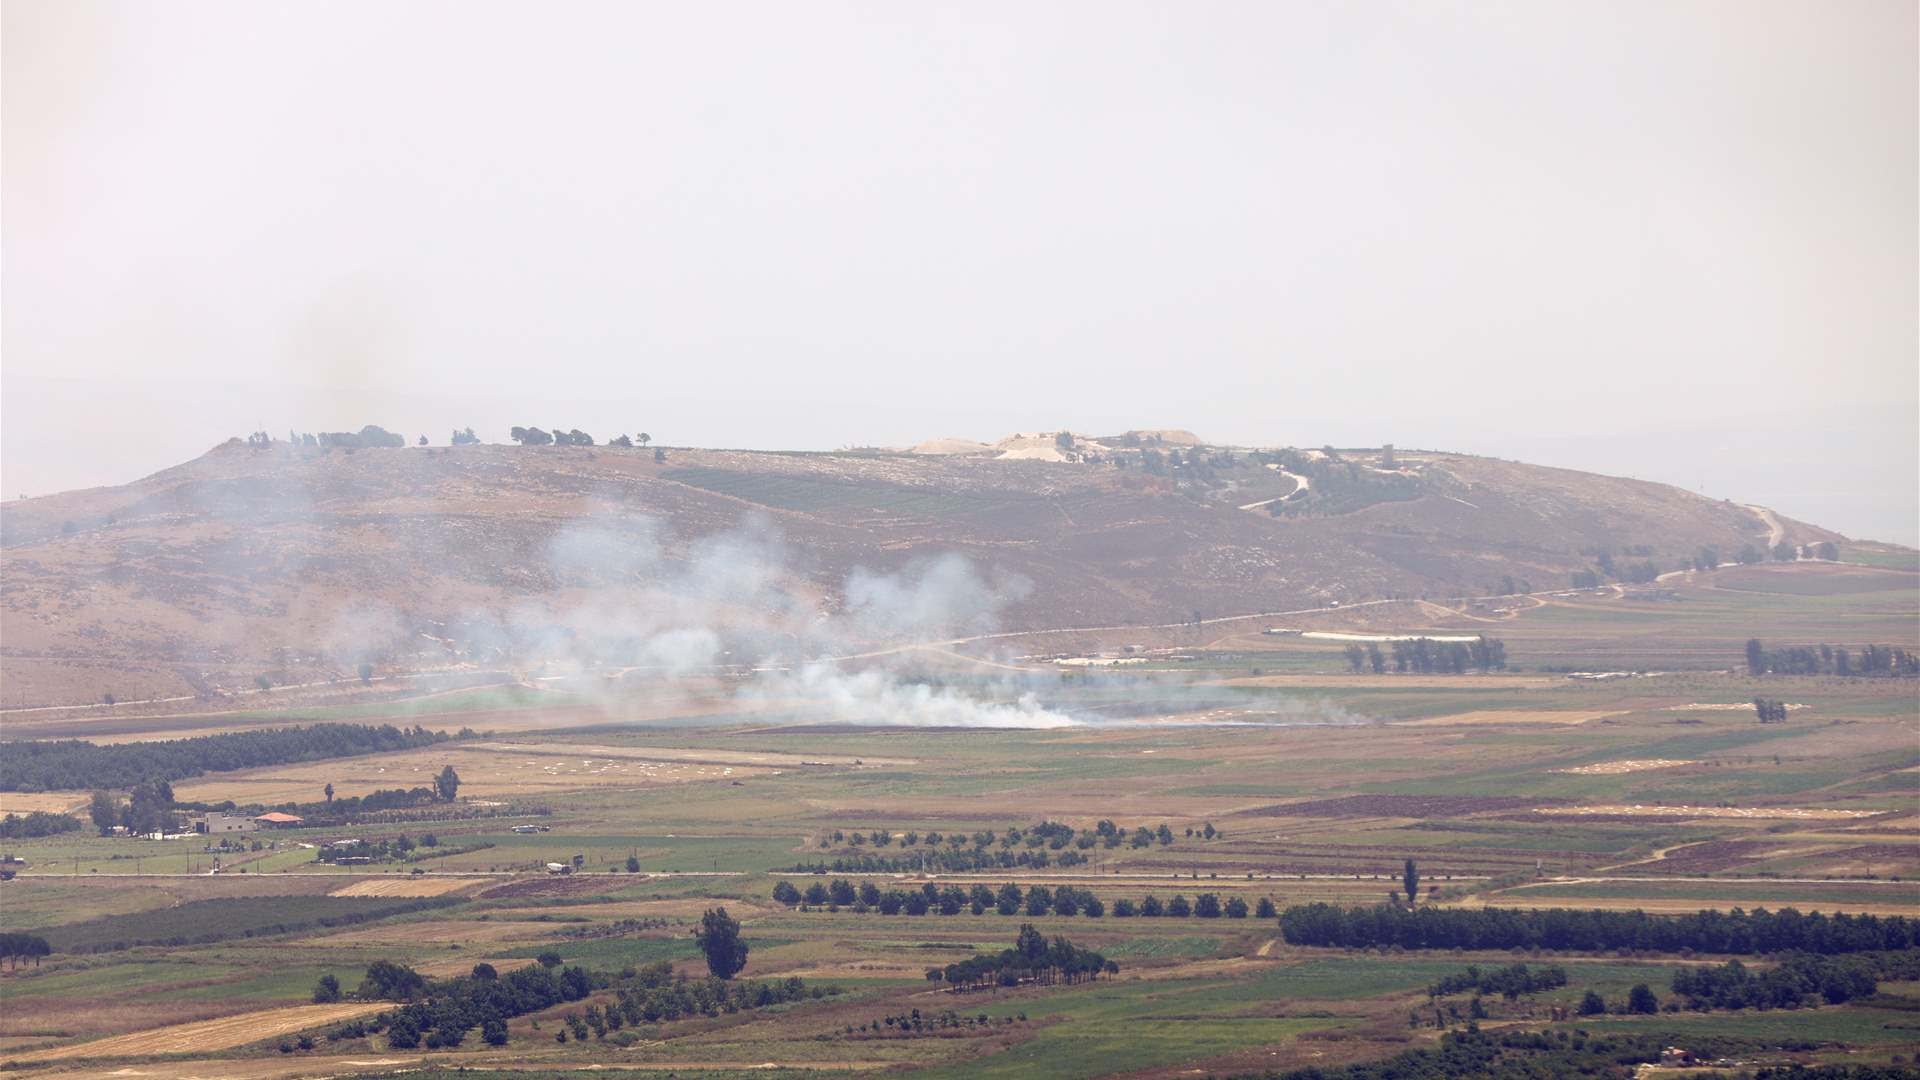 Israeli artillery shelling hits Kfarchouba and Rashaya Al-Fakhar, civilian injured